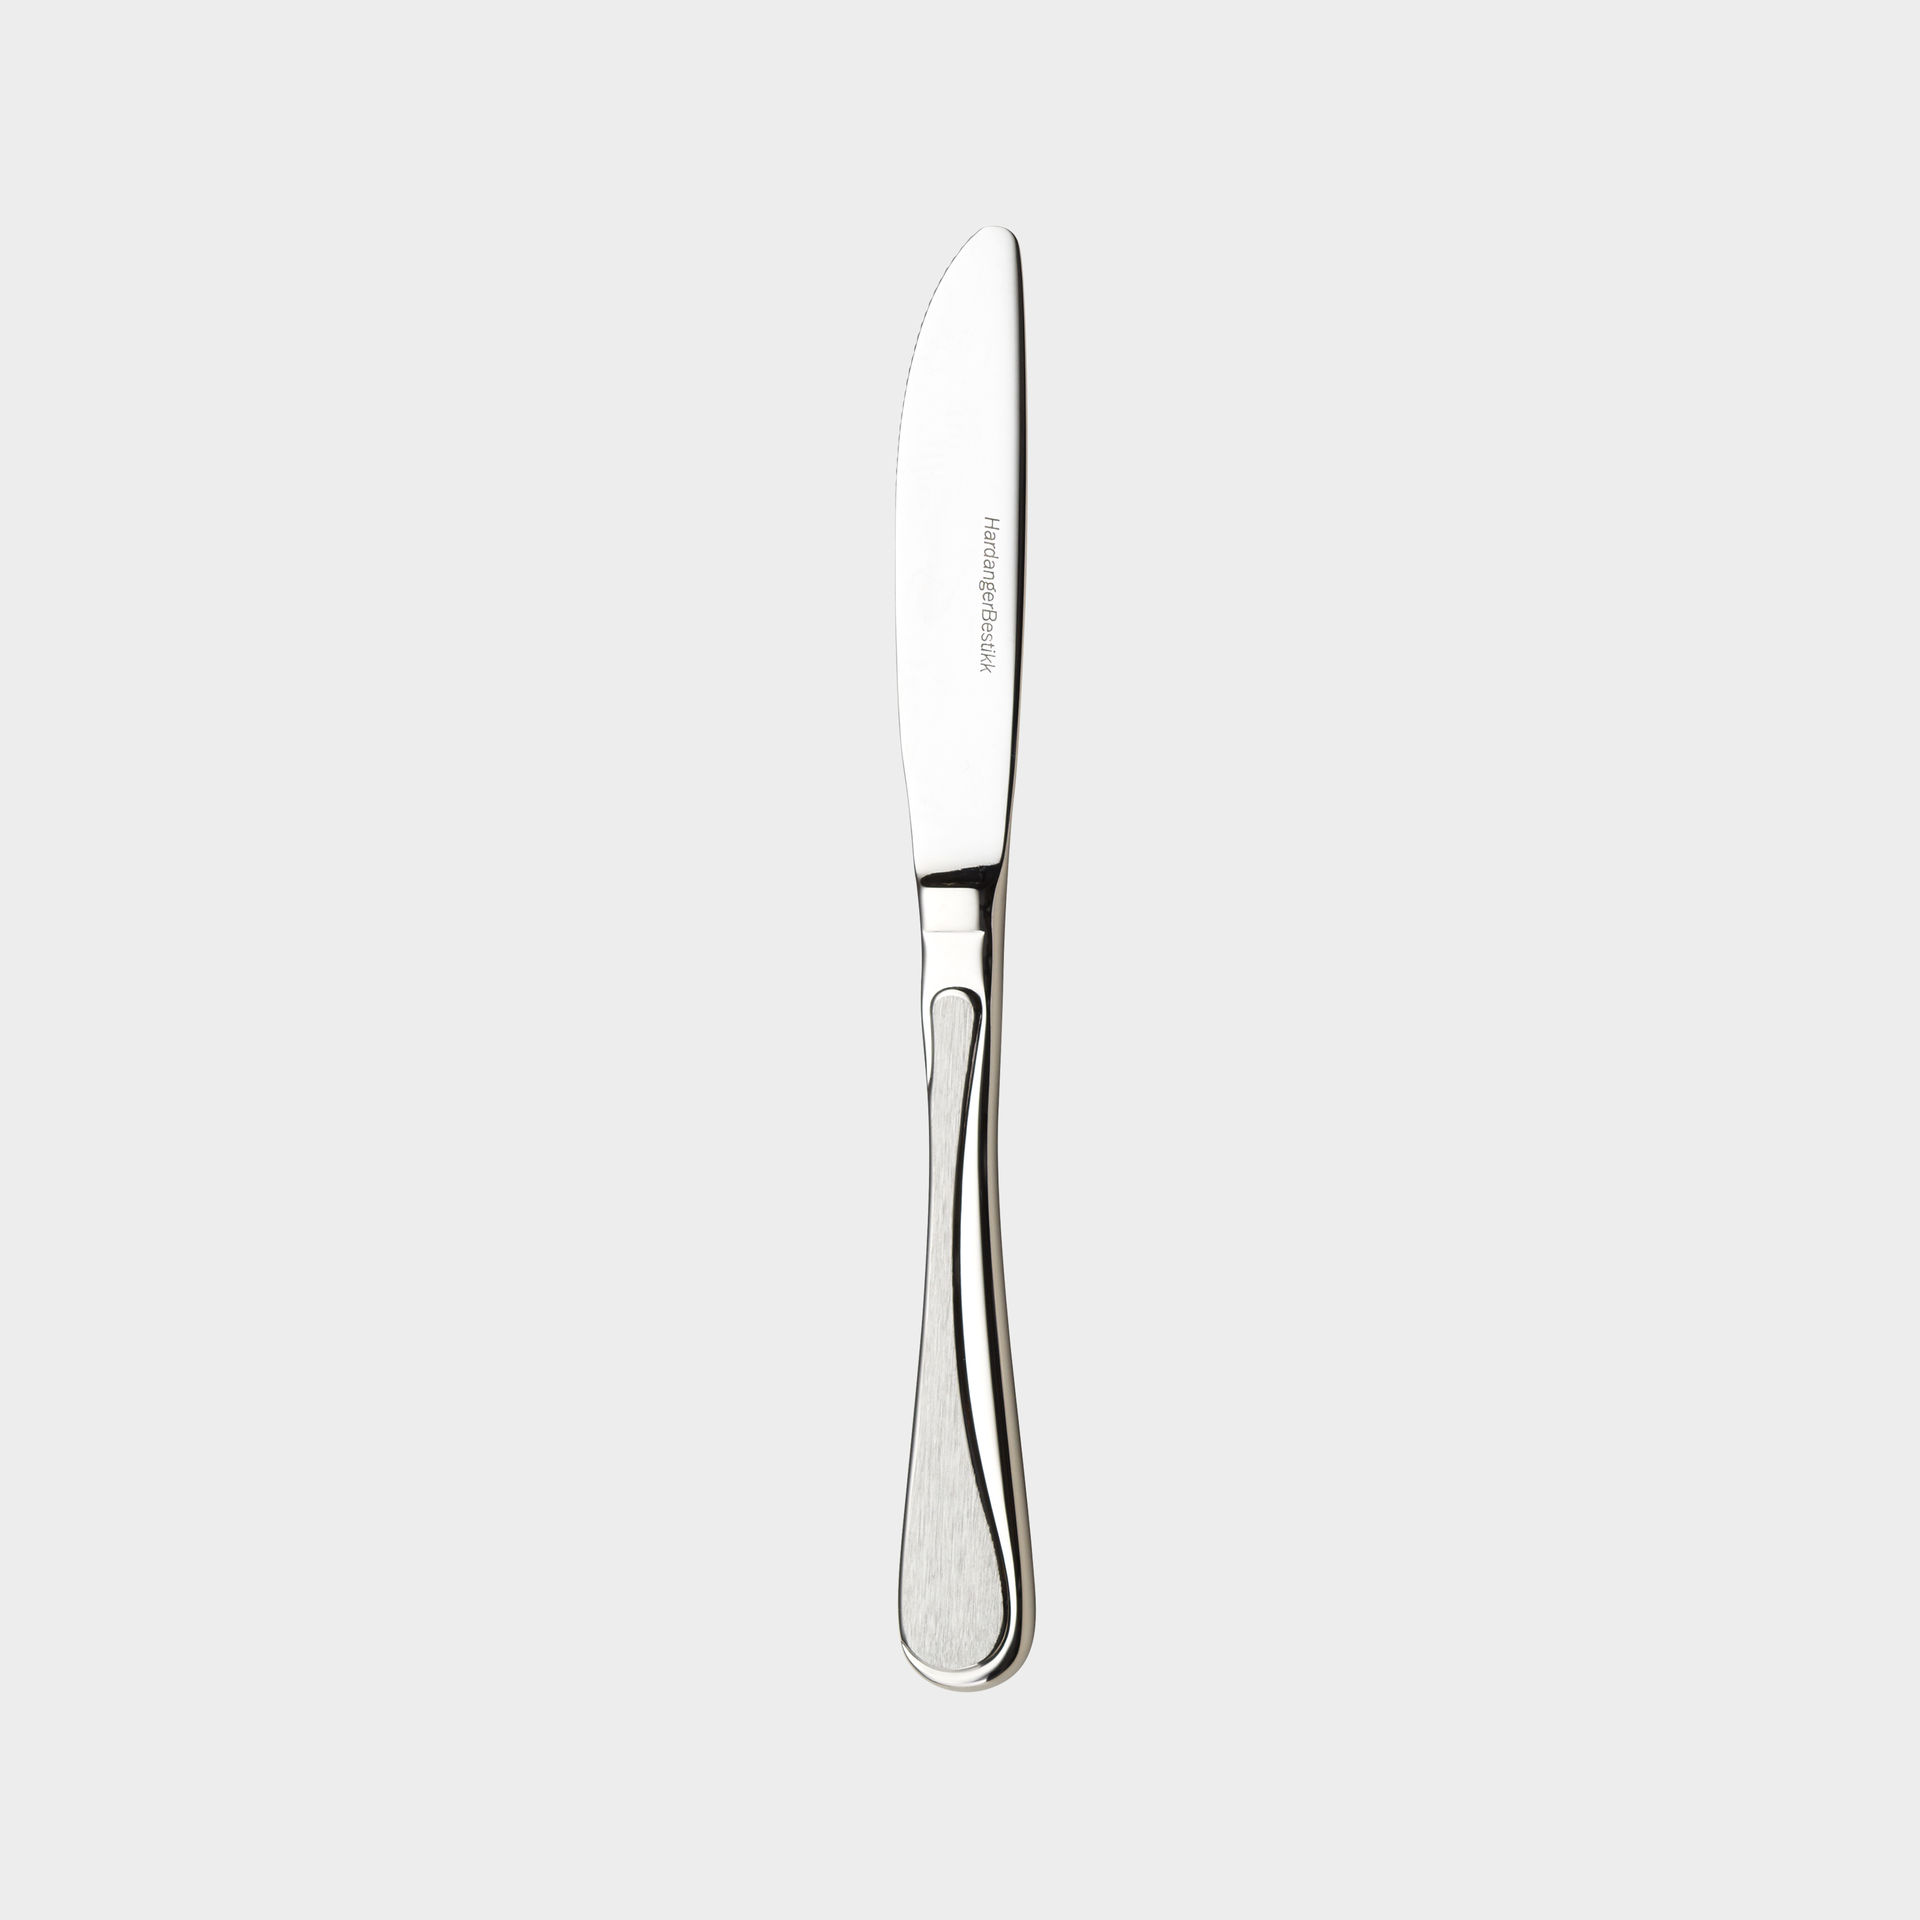 Carina appetizer knife product image